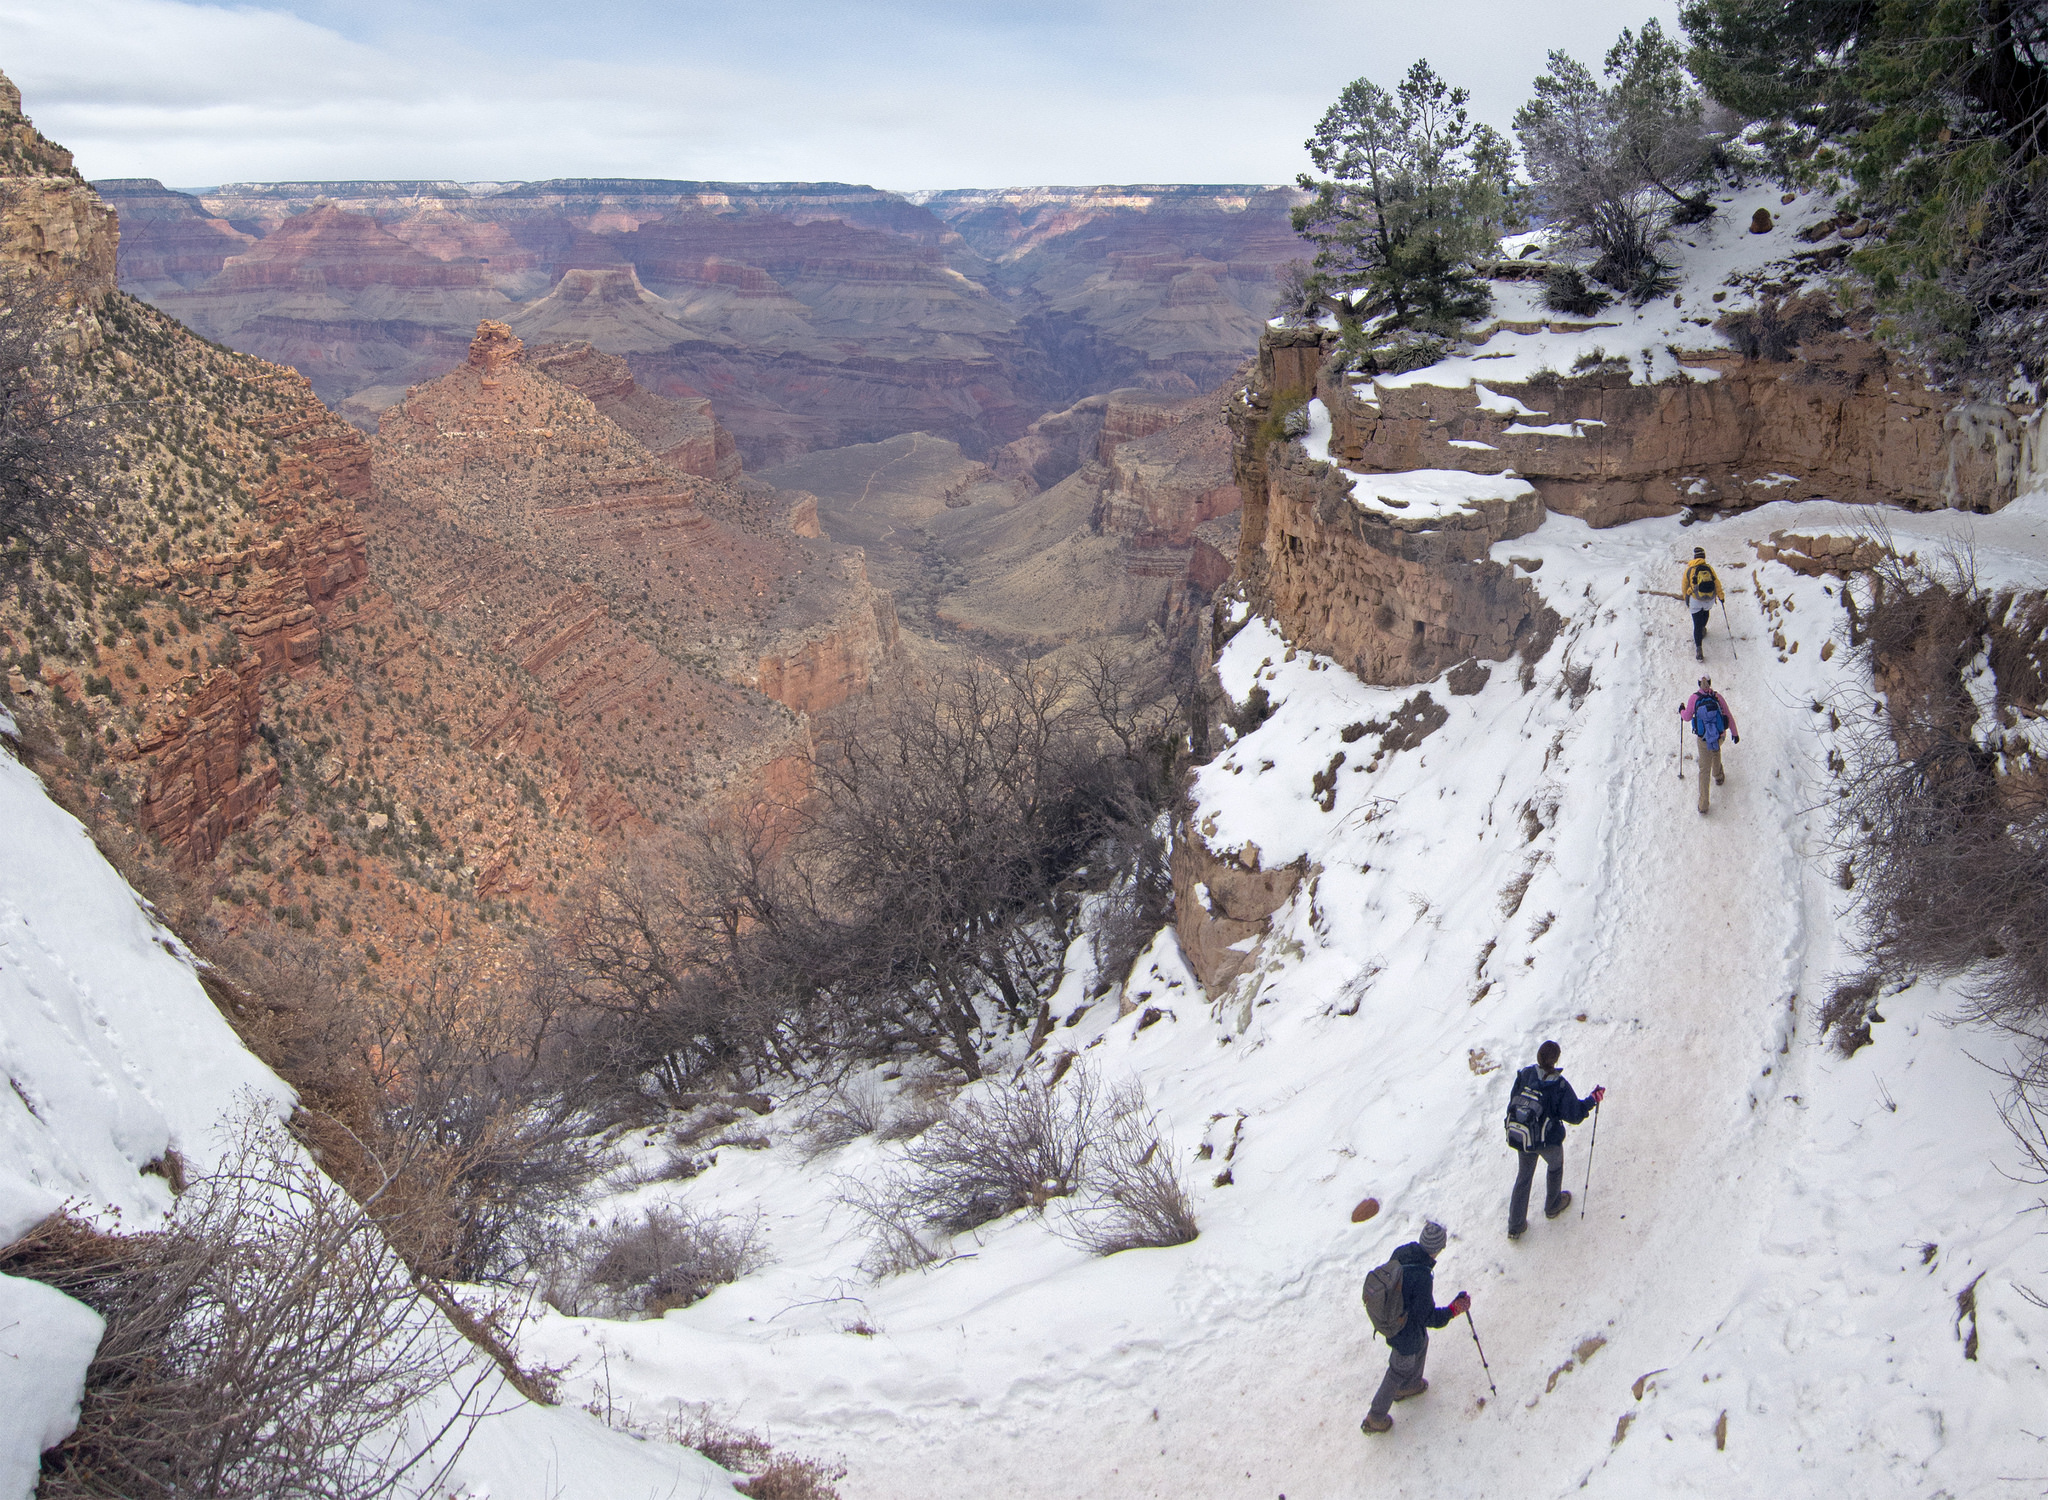 Photo via Grand Canyon NPS on Flickr